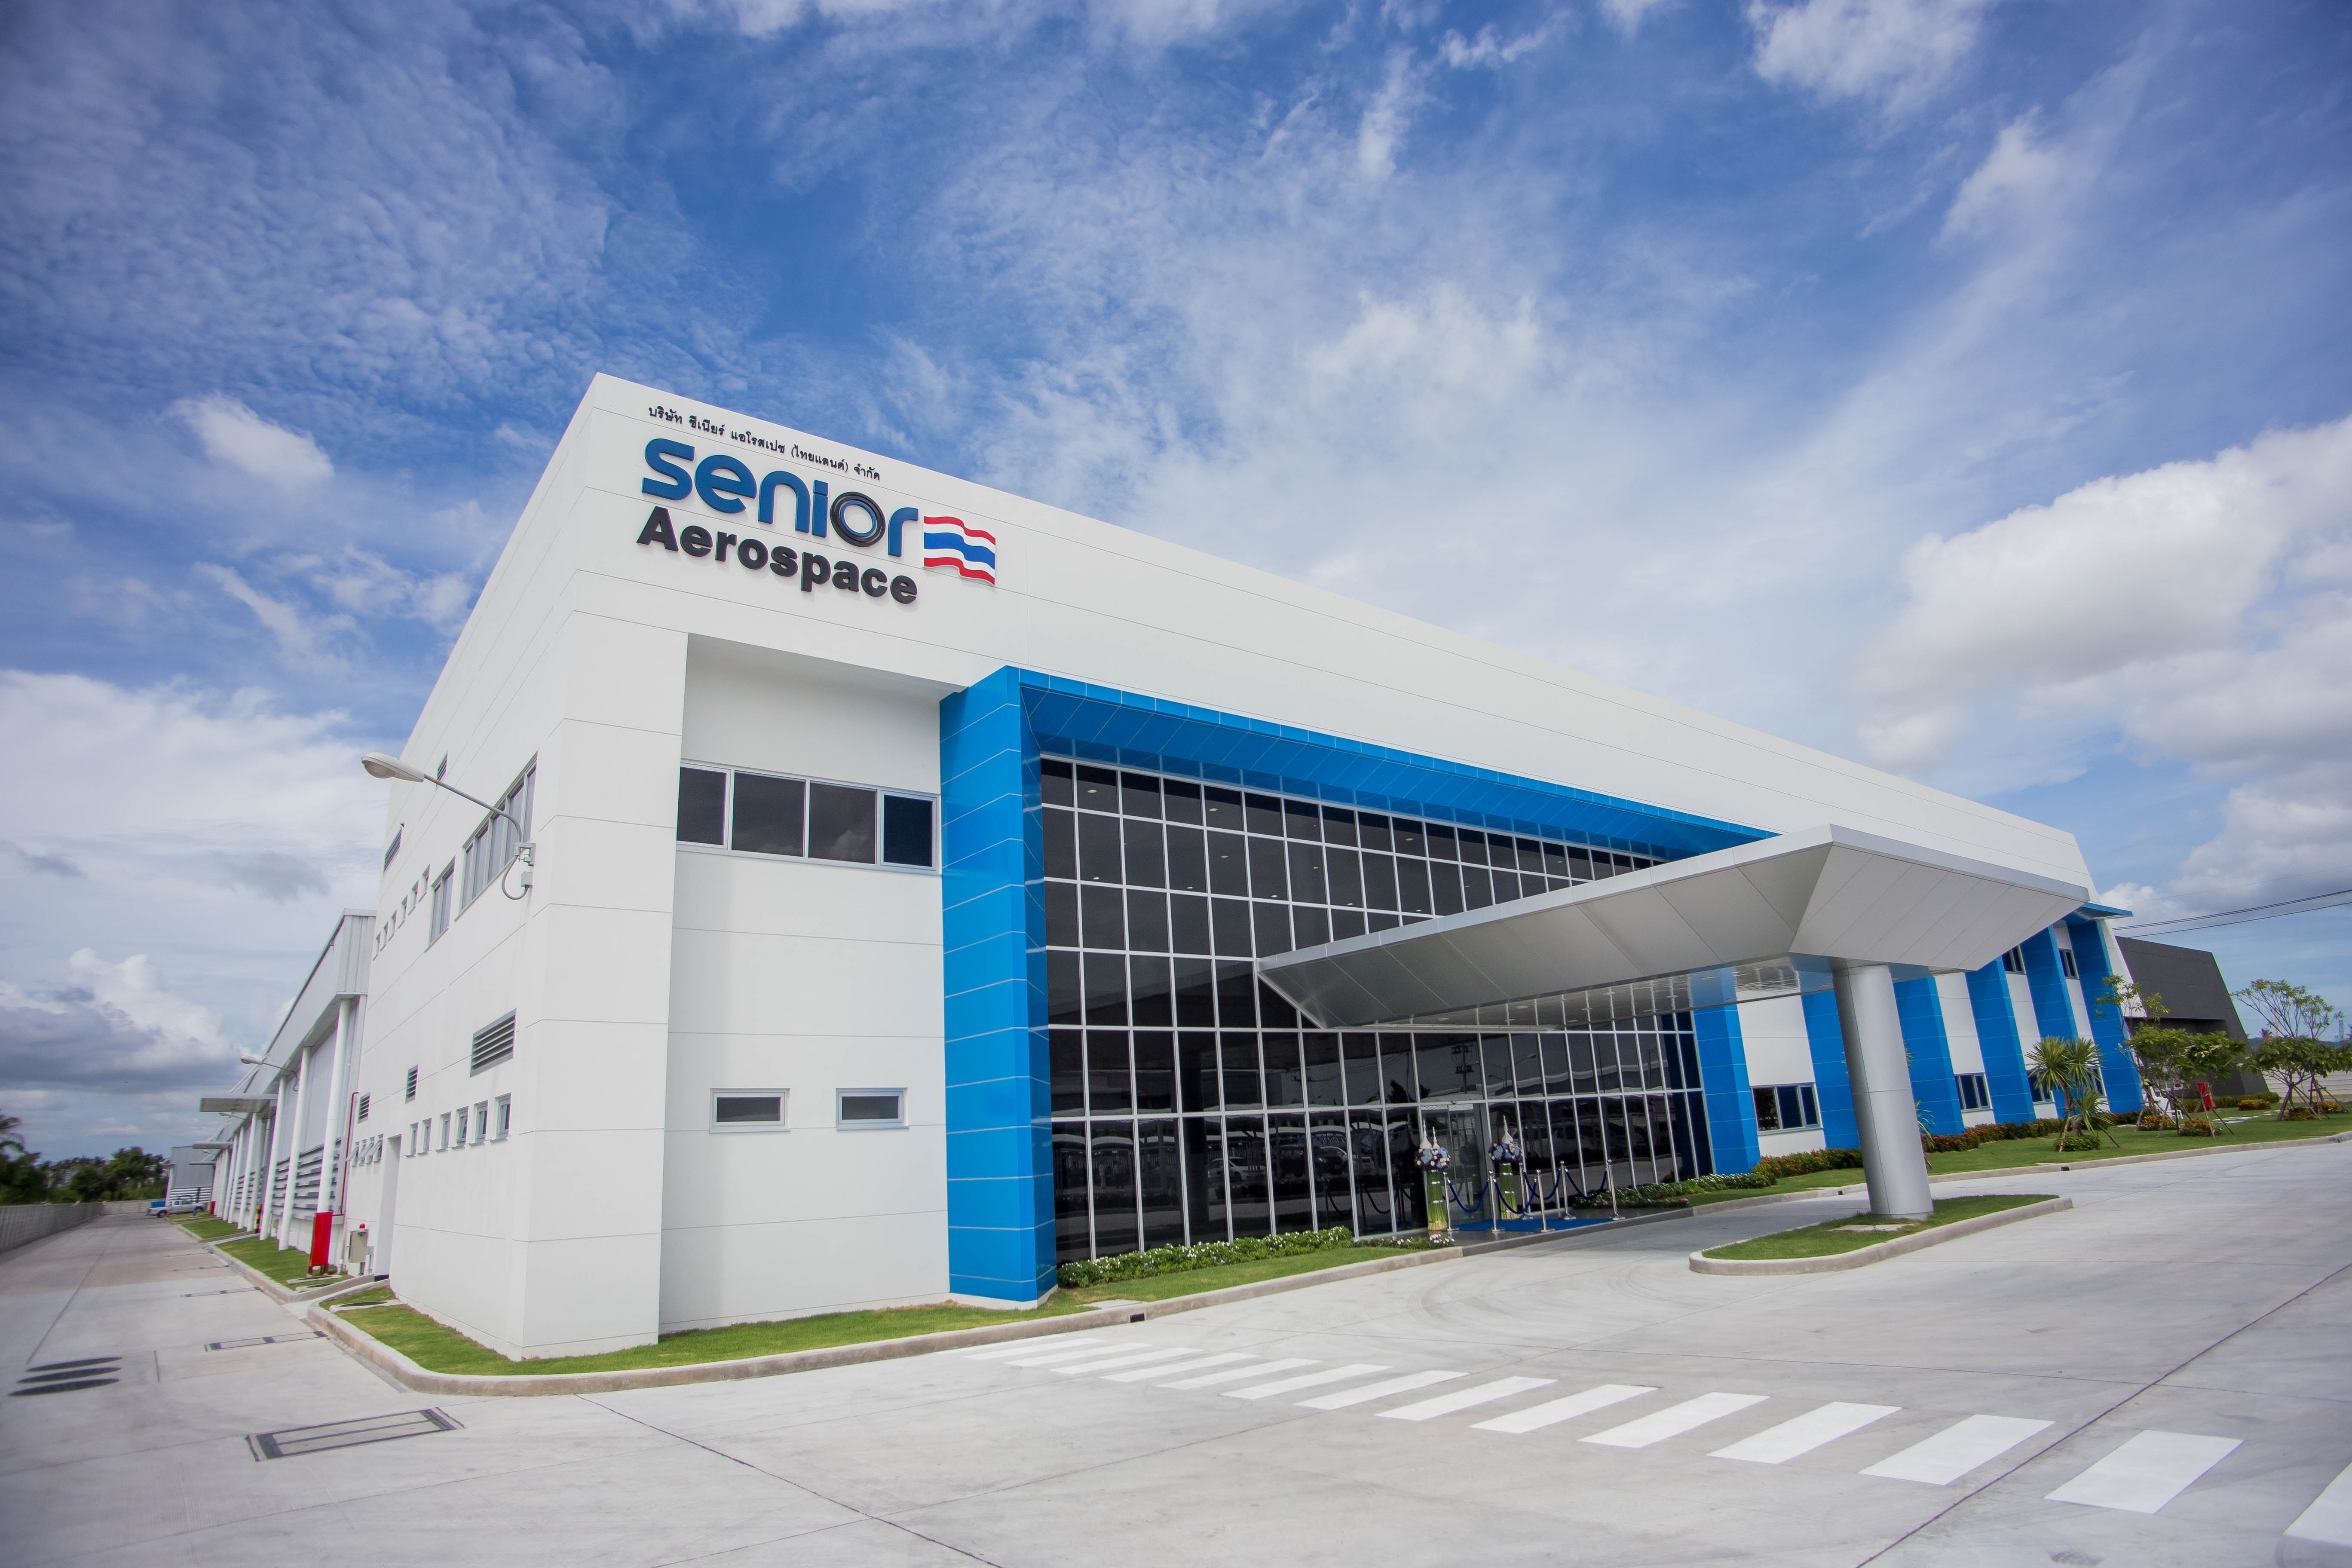 Senior在泰国获得价值1200万美元的航空铝部件供应协议